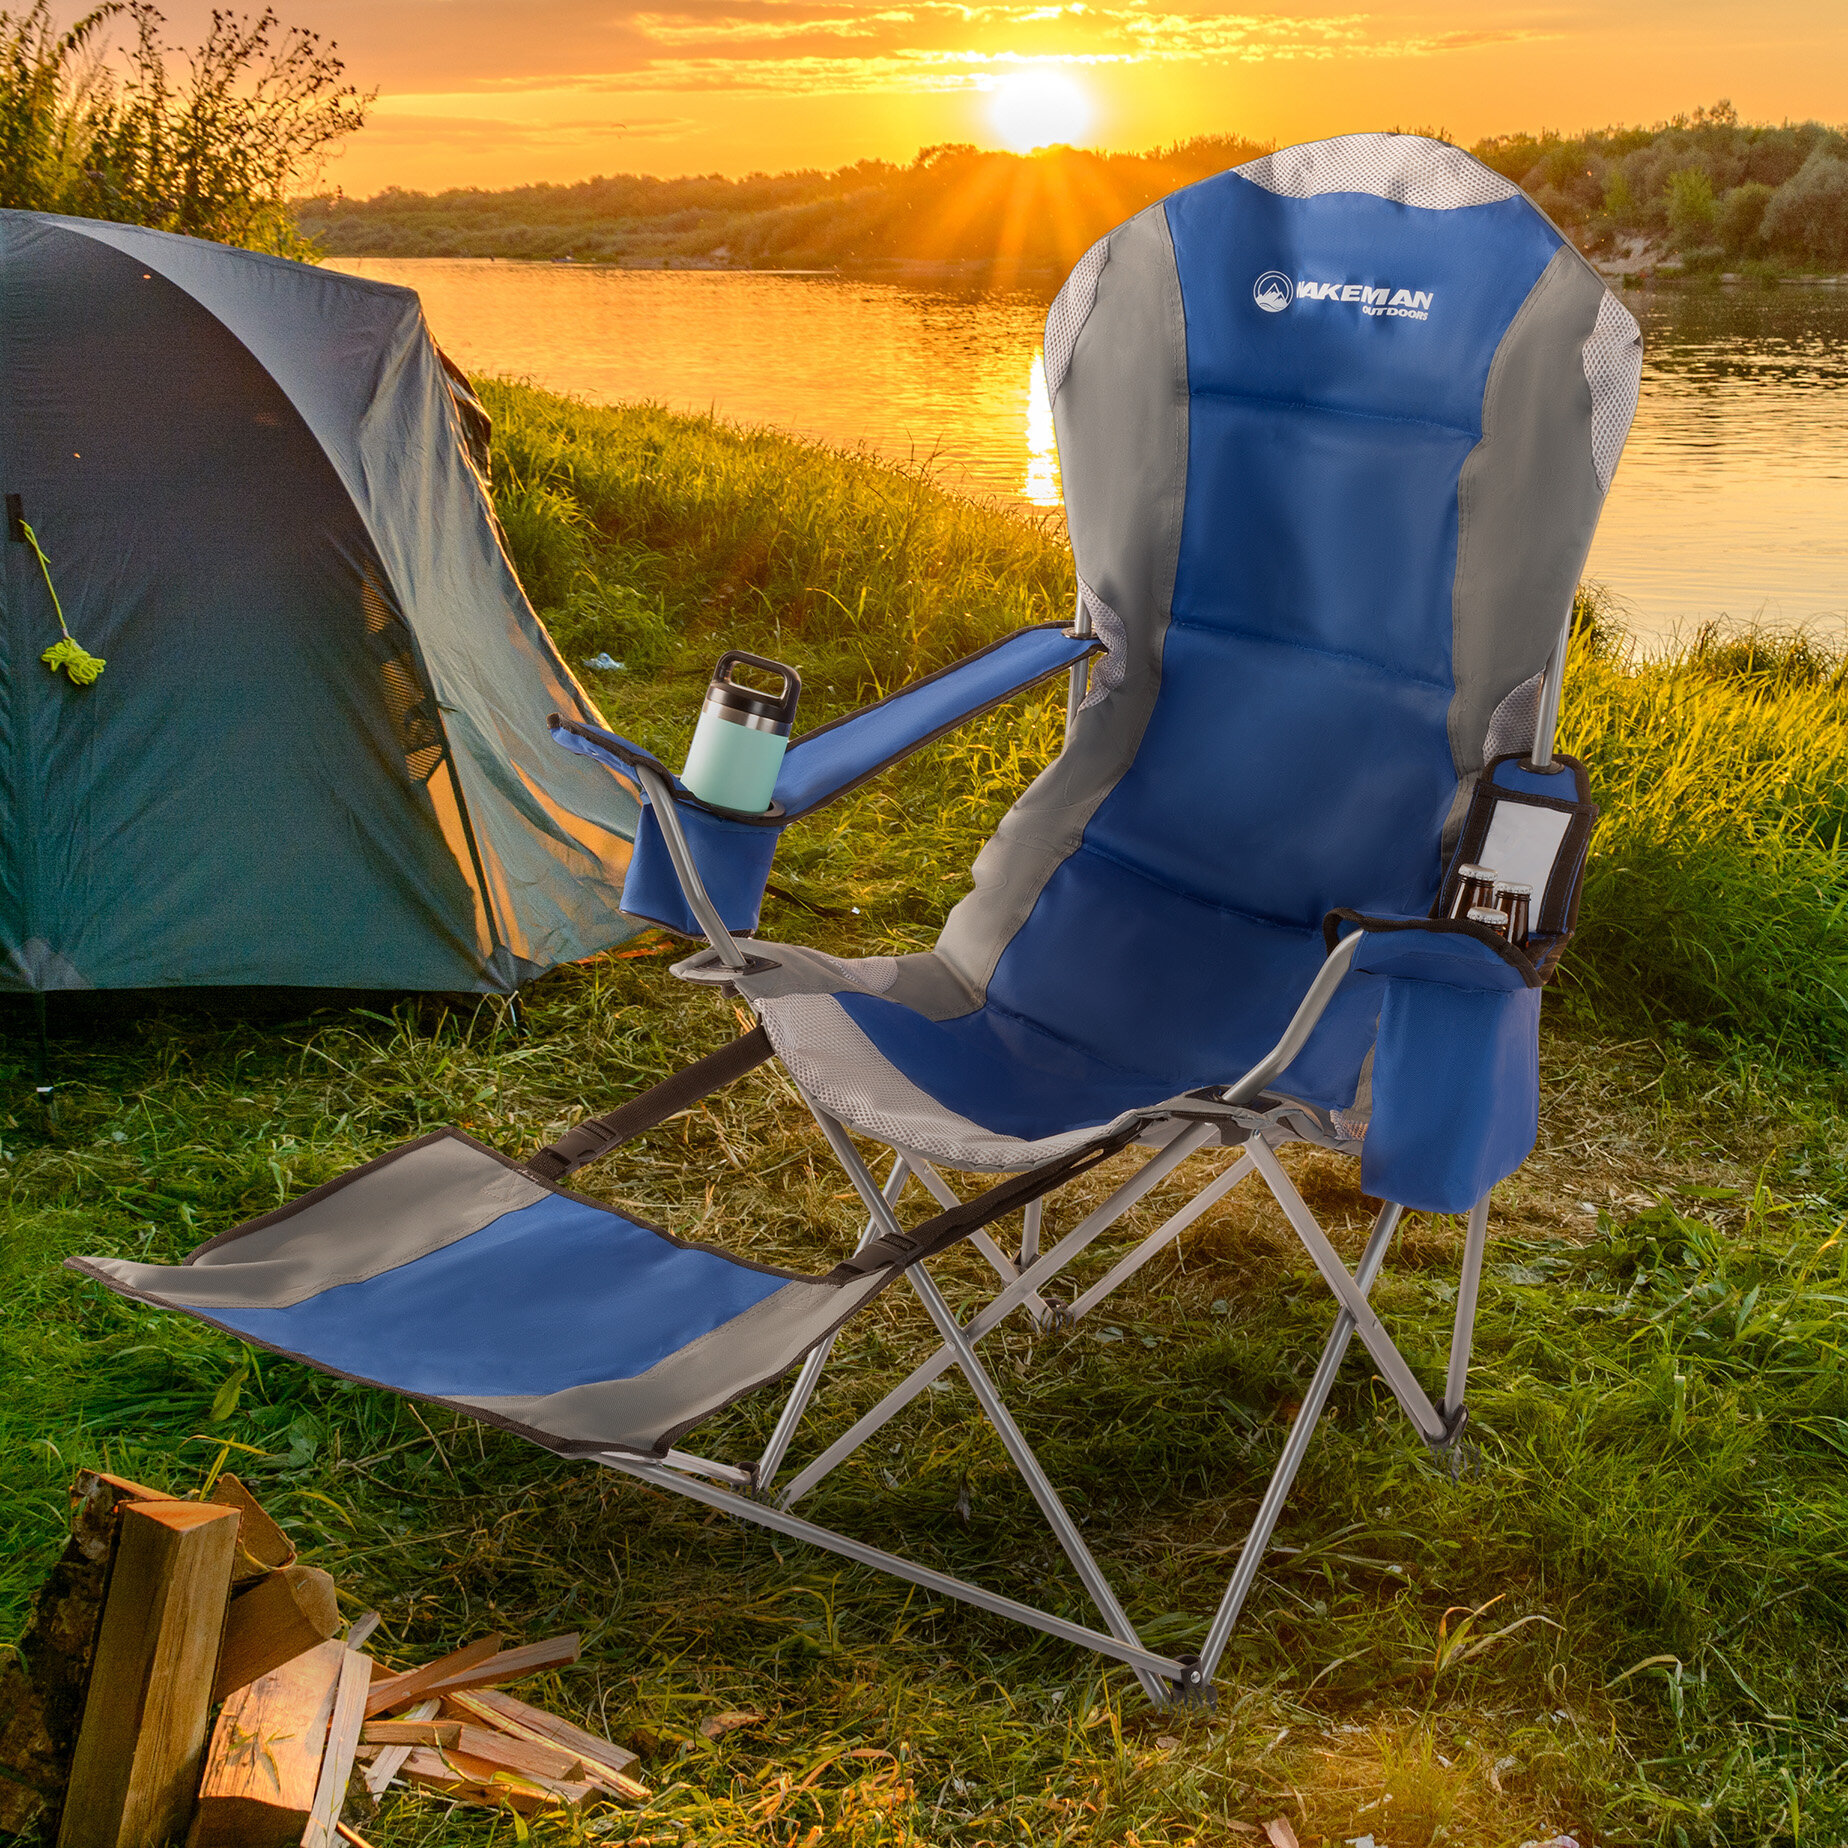 wakeman Folding Camping Chair  Reviews Wayfair